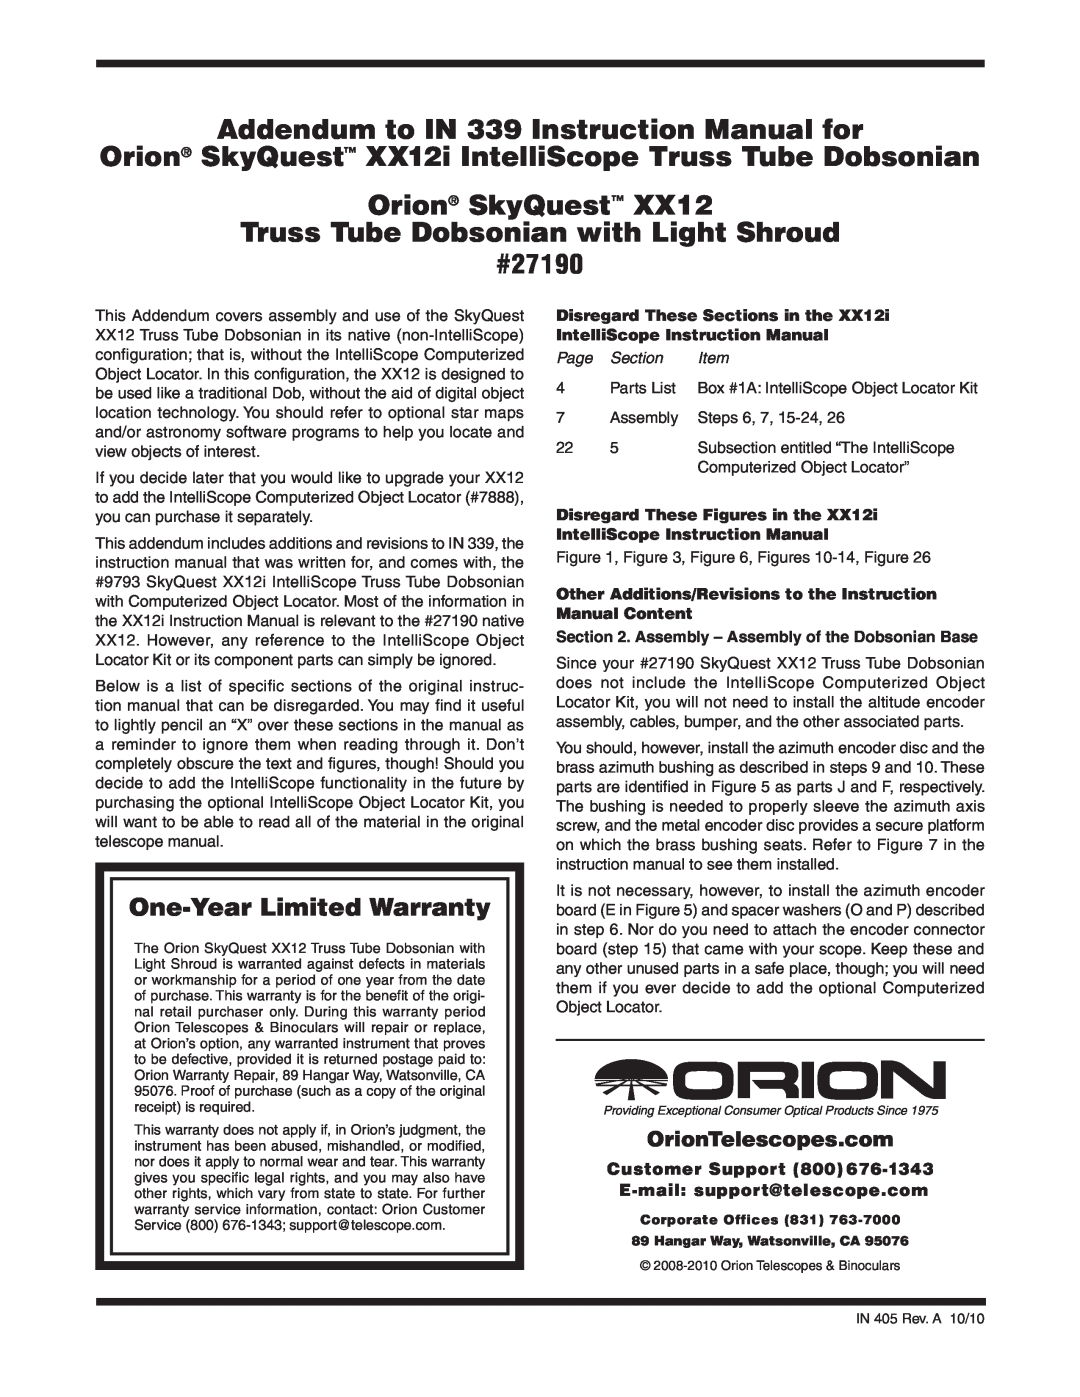 Orion XX12I warranty Orion SkyQuest, Truss Tube Dobsonian with Light Shroud, #27190, One-YearLimited Warranty 